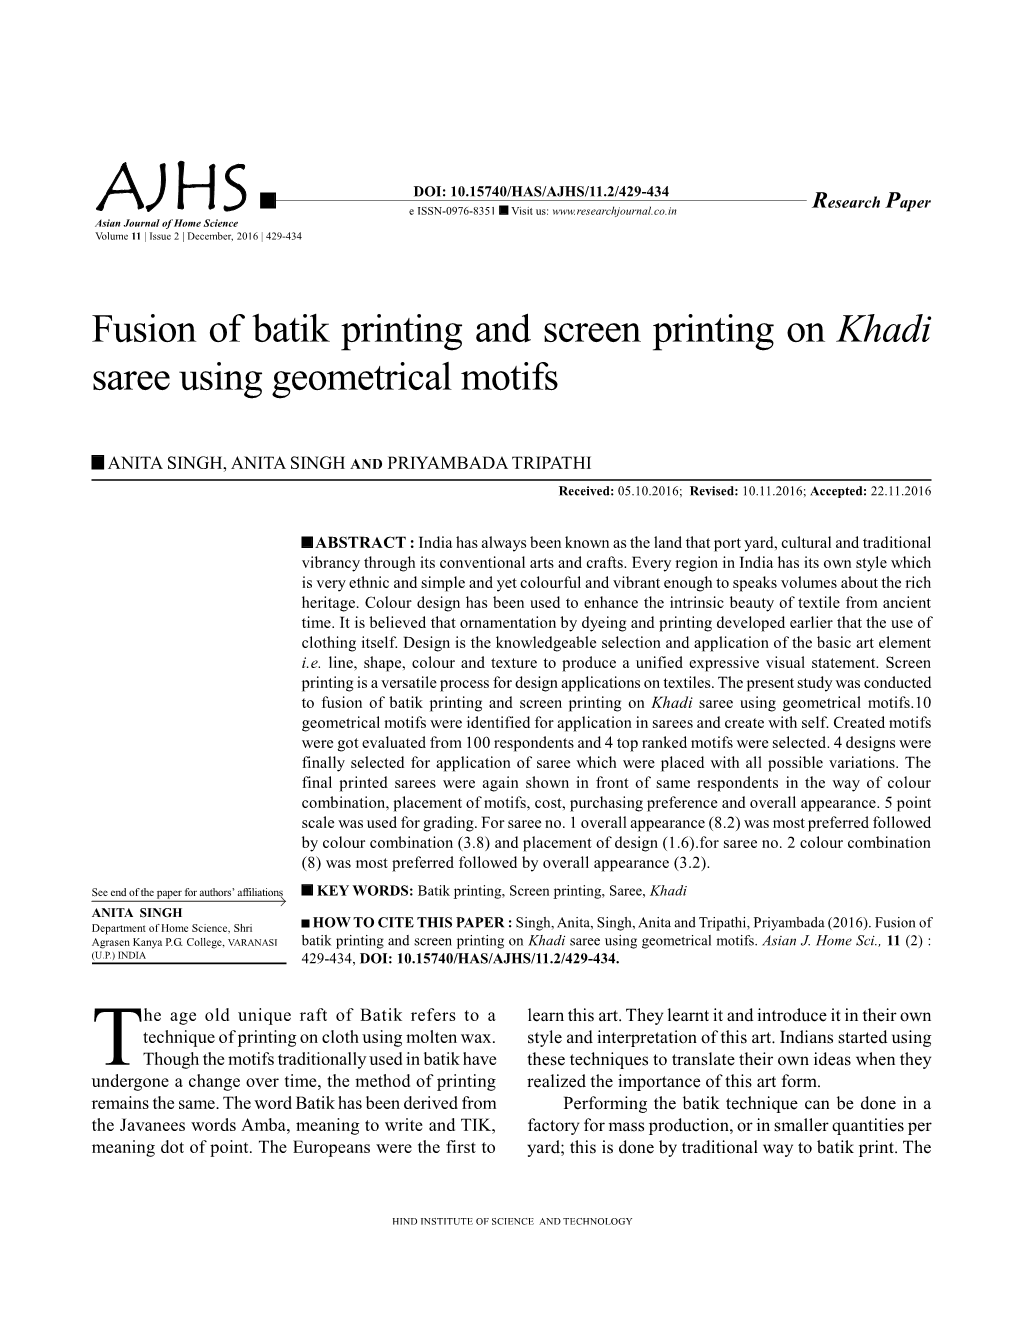 Fusion of Batik Printing and Screen Printing on Khadi Saree Using Geometrical Motifs